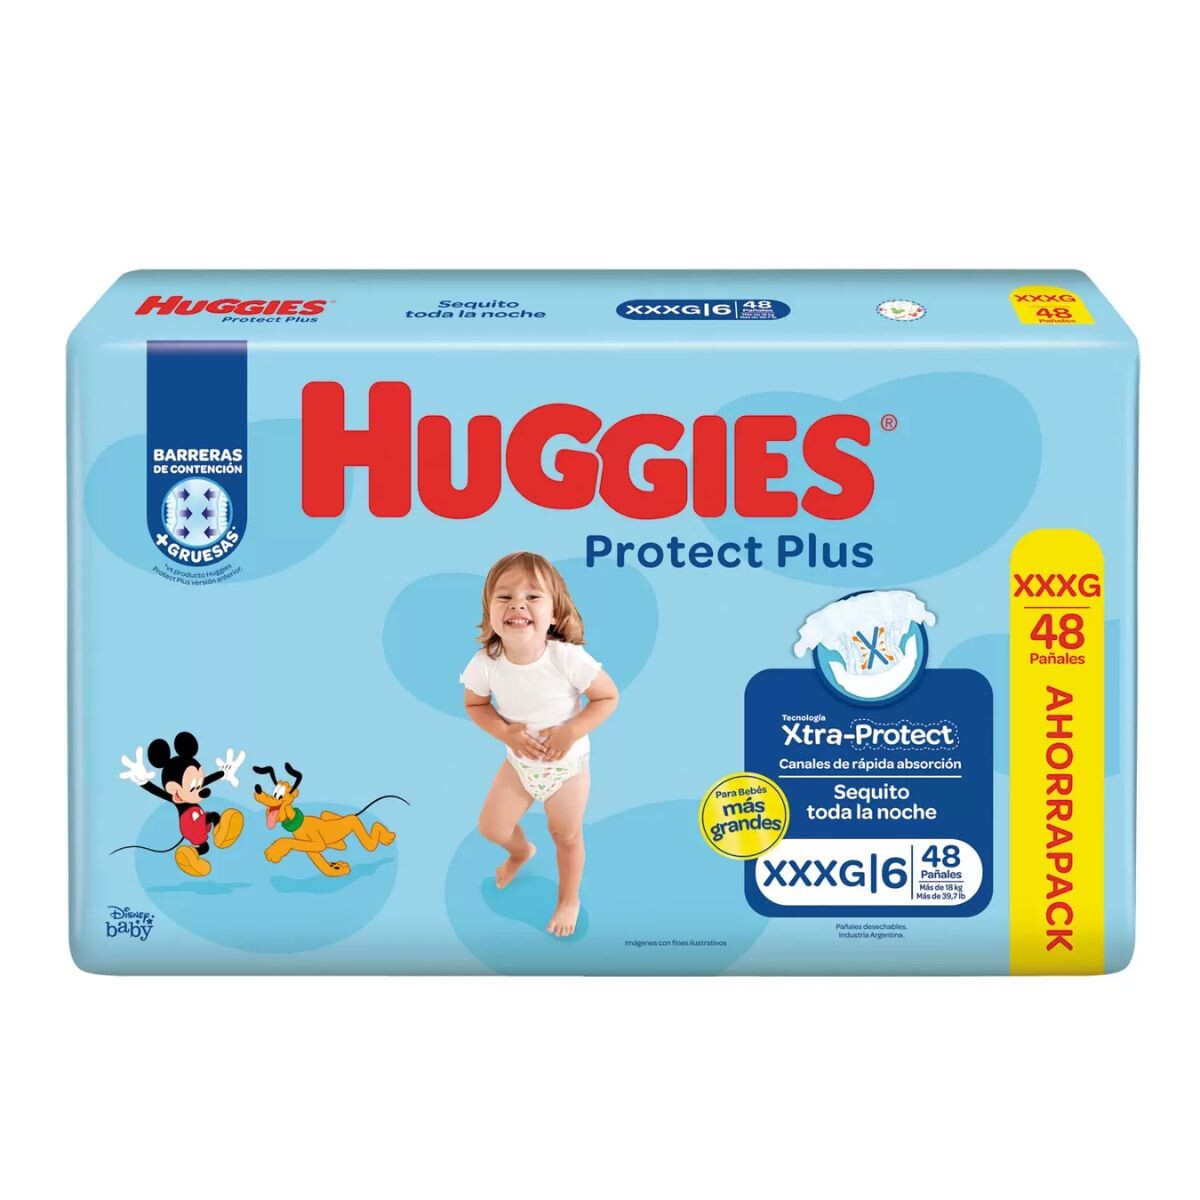 Pañales Huggies Protect Plus Unisex XXXG X48 